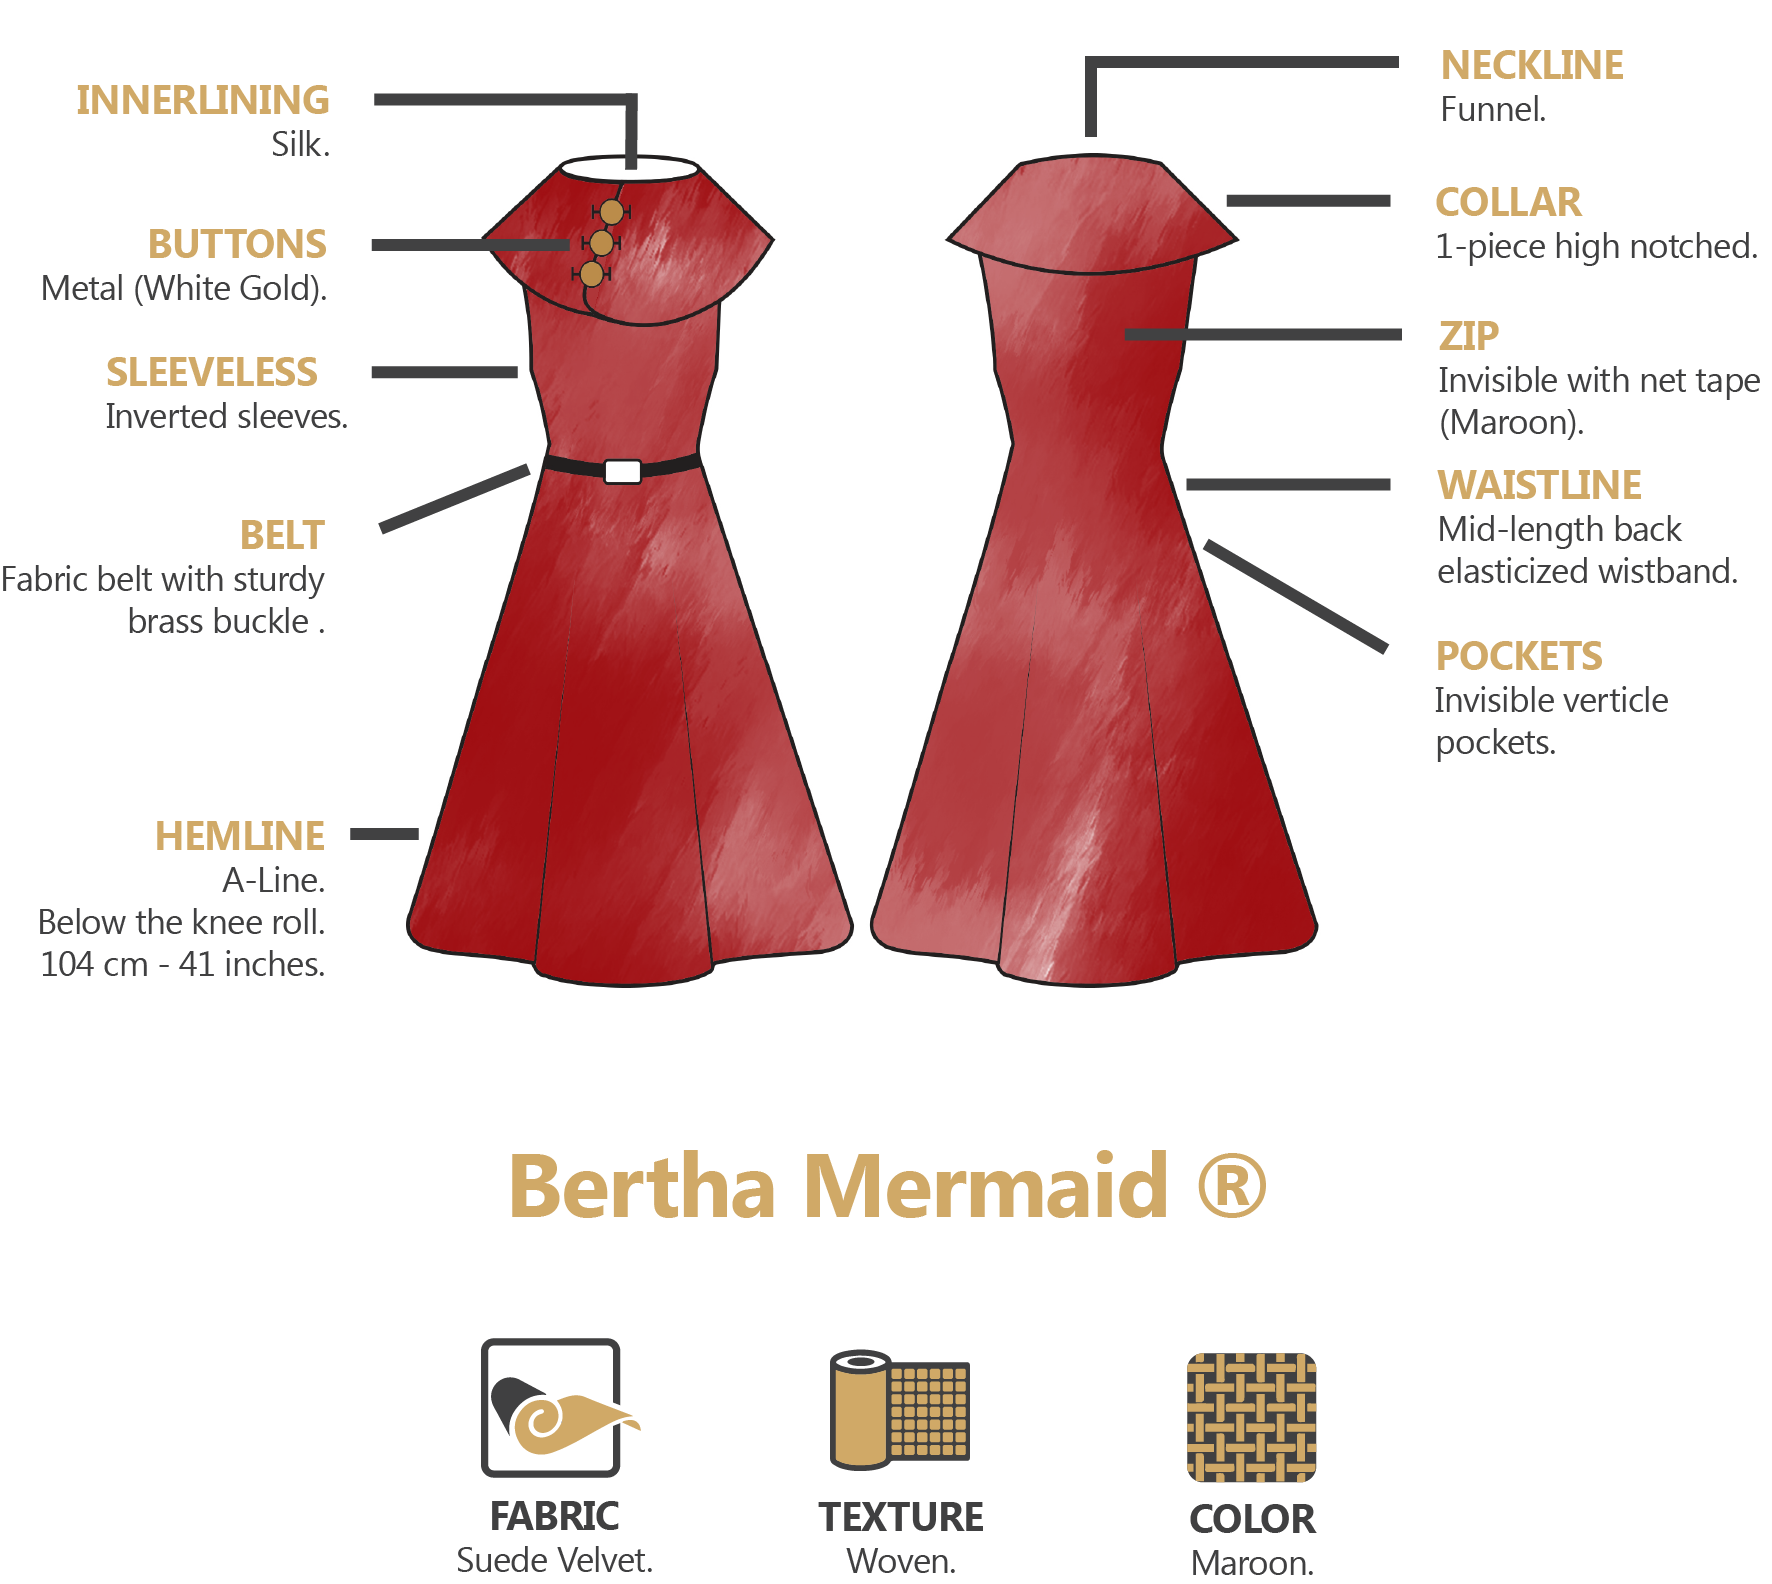 bartha-mermaid-a-line-suede-velvet-dress